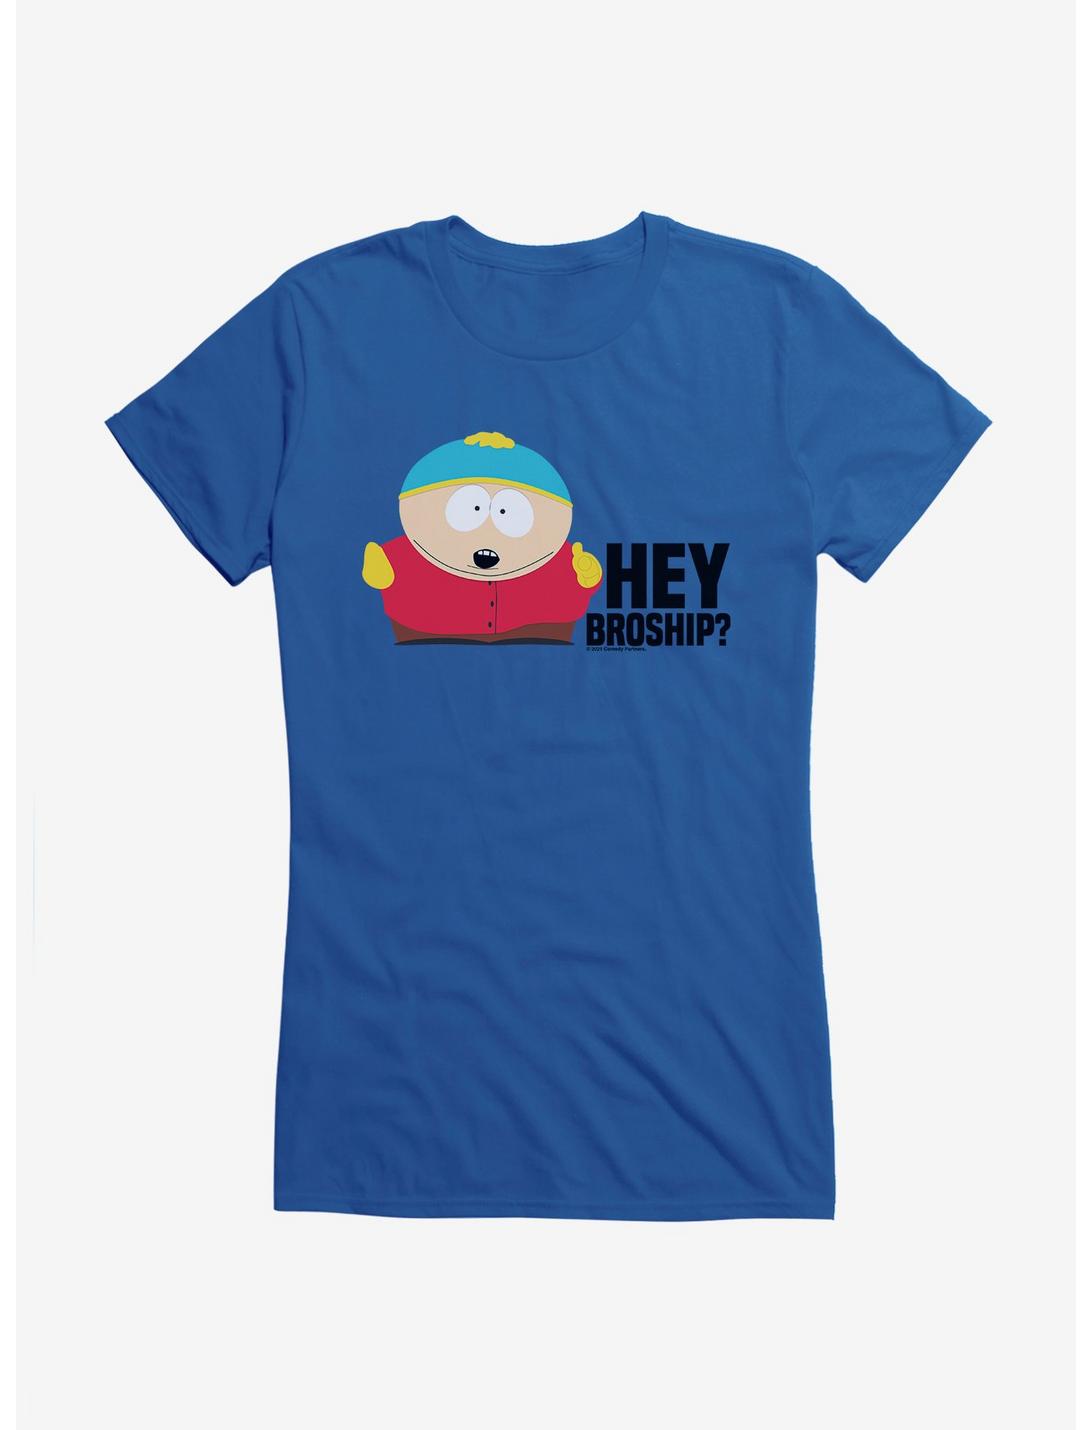 South Park Season Reference Broship Girls T-Shirt, , hi-res